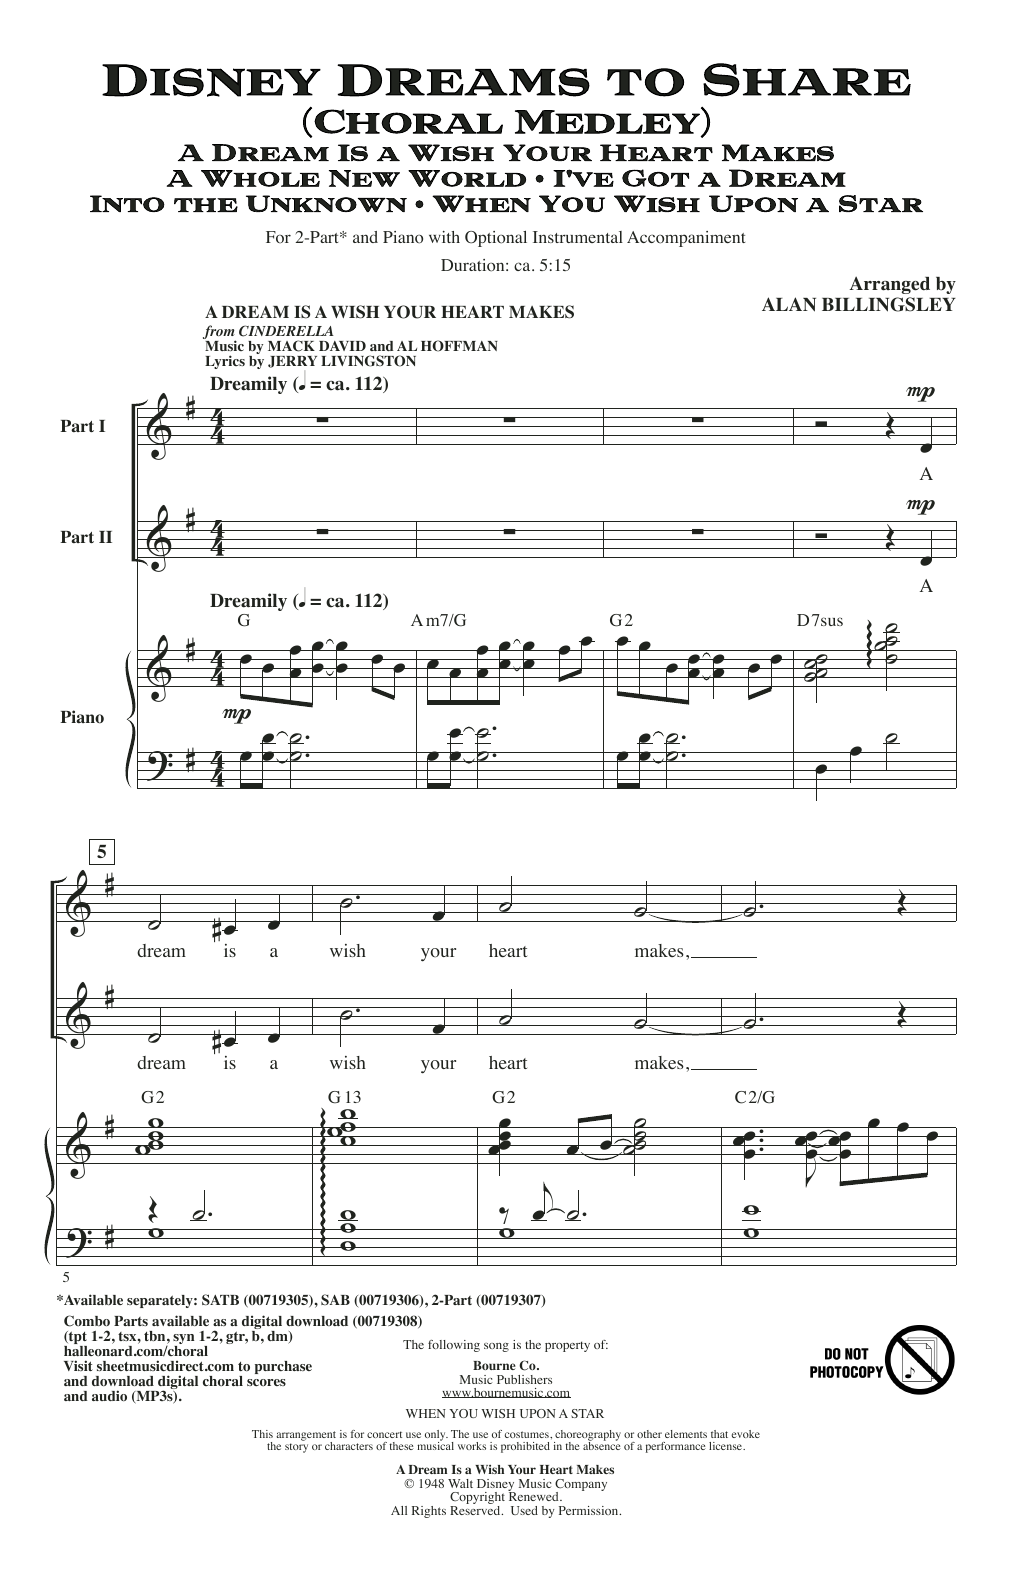 Alan Billingsley Disney Dreams To Share (Choral Medley) Sheet Music Notes & Chords for SAB Choir - Download or Print PDF